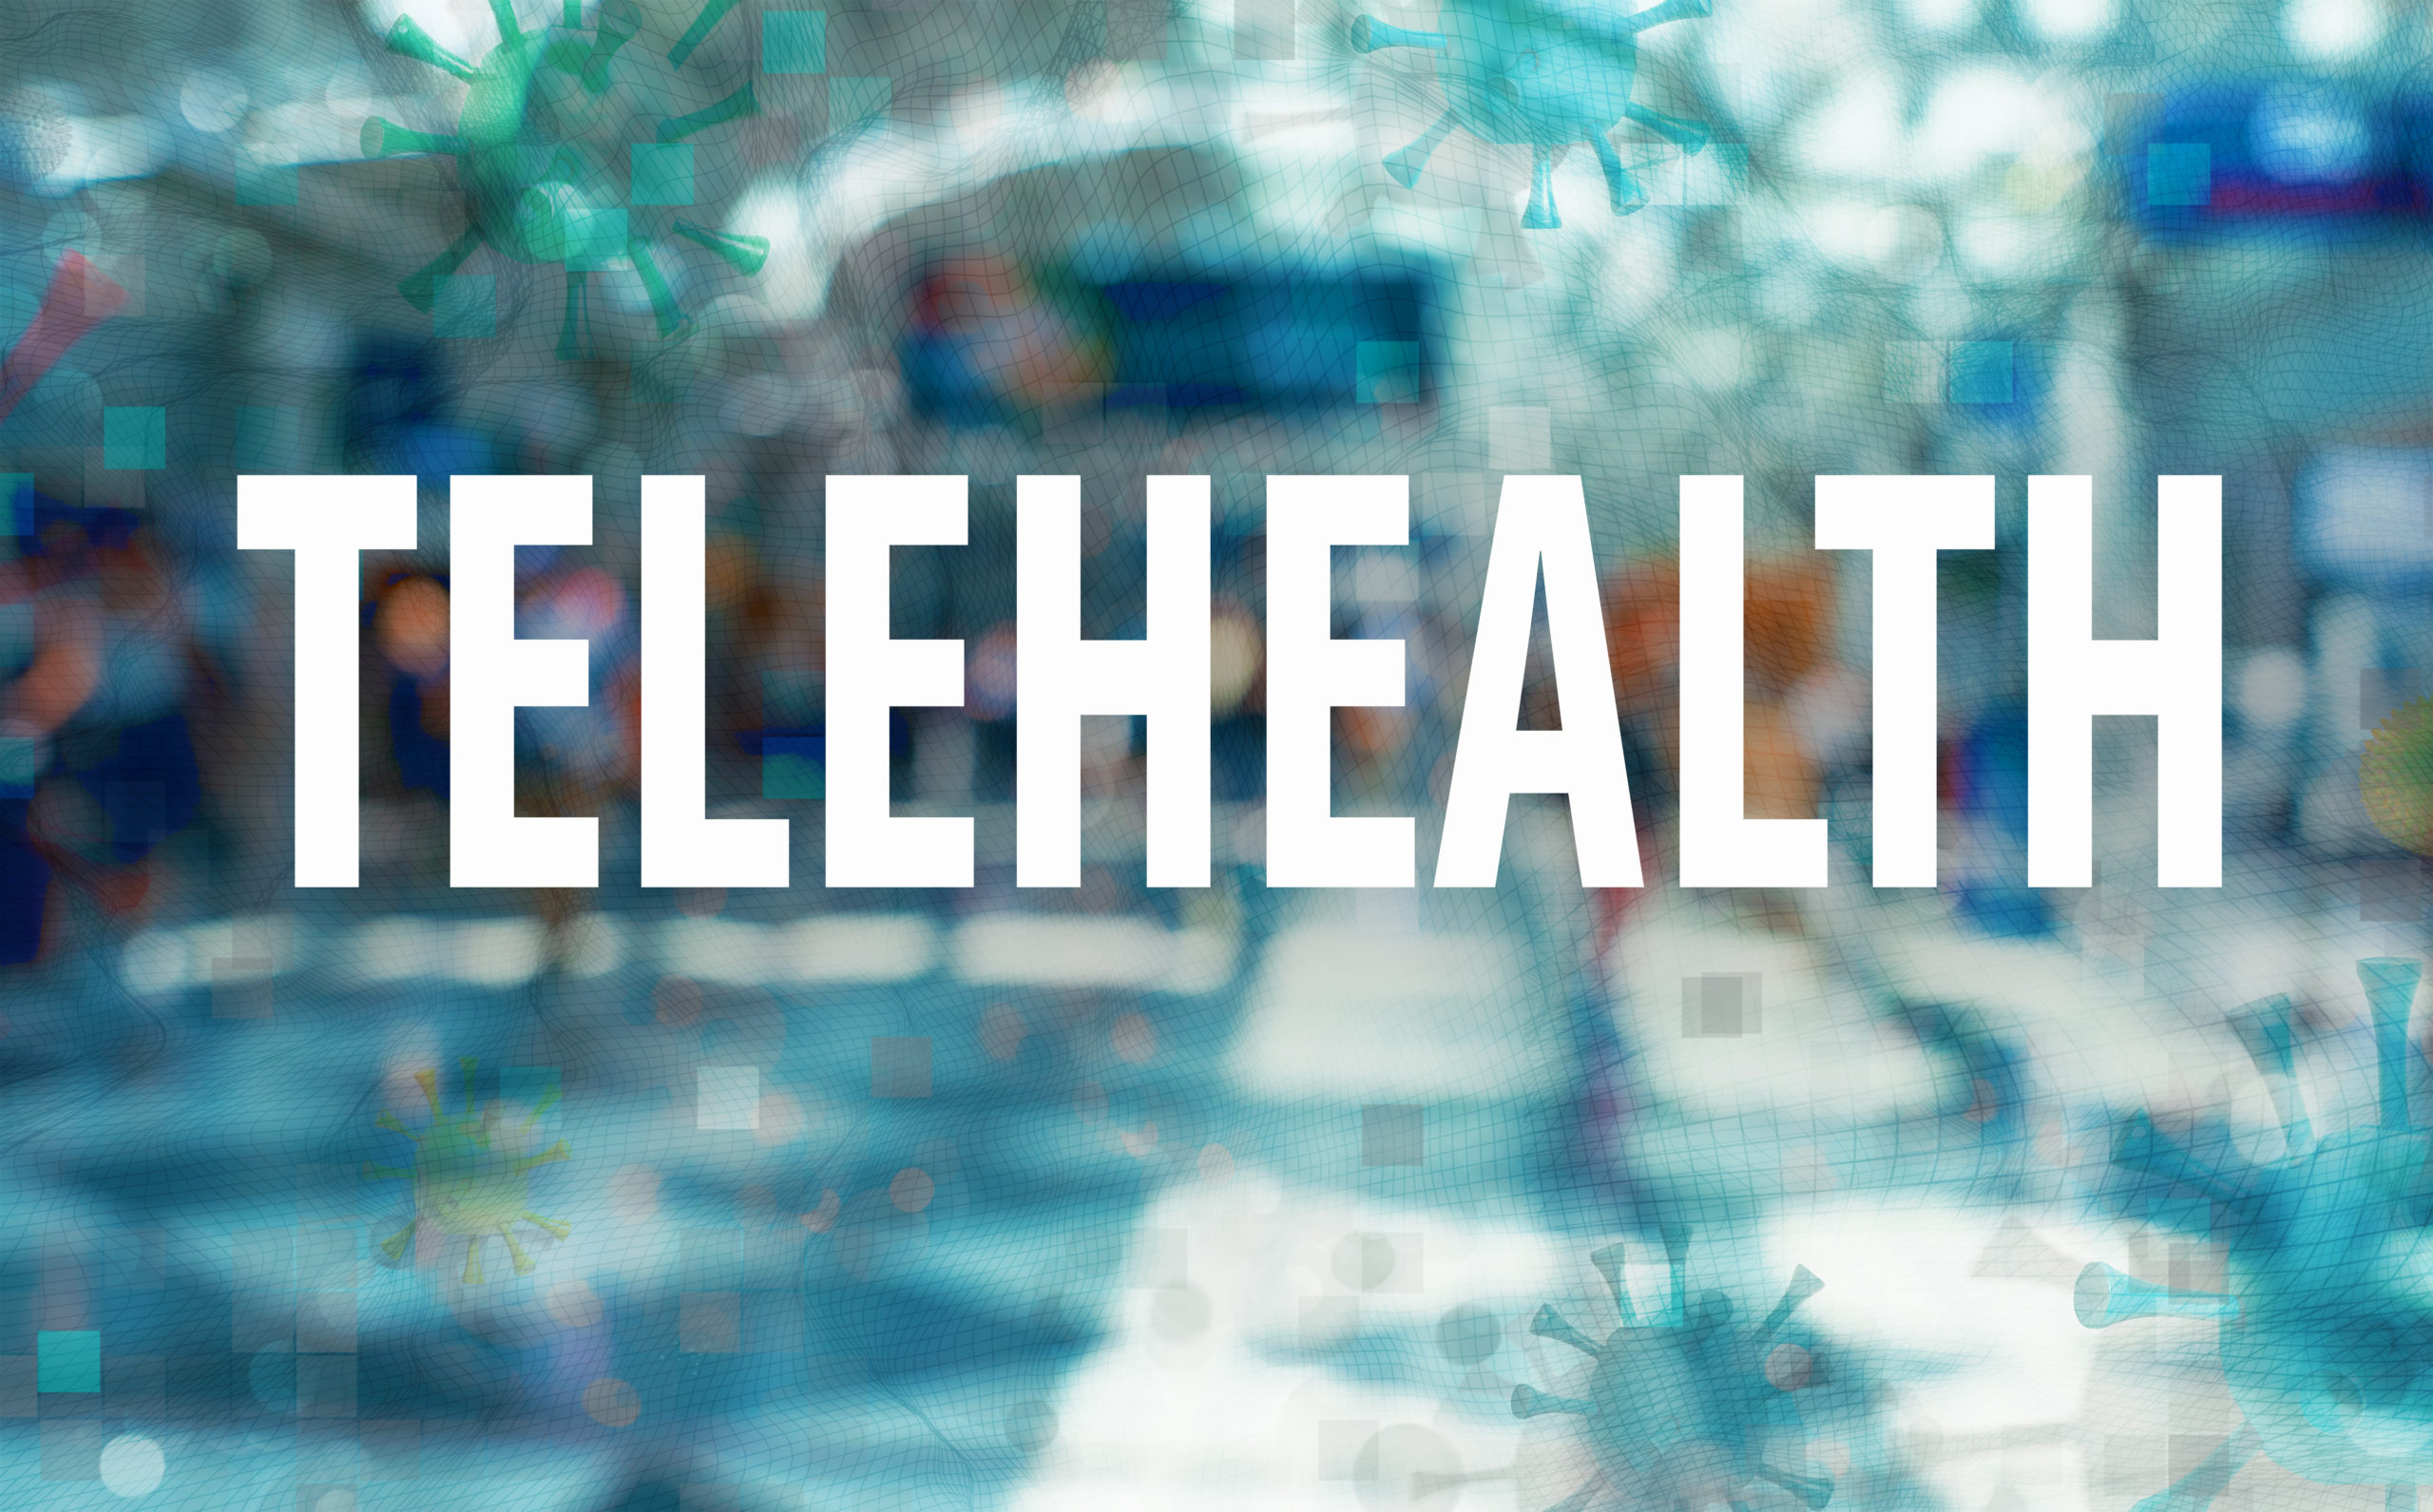 The word "TELEHEALTH" on a blurred background